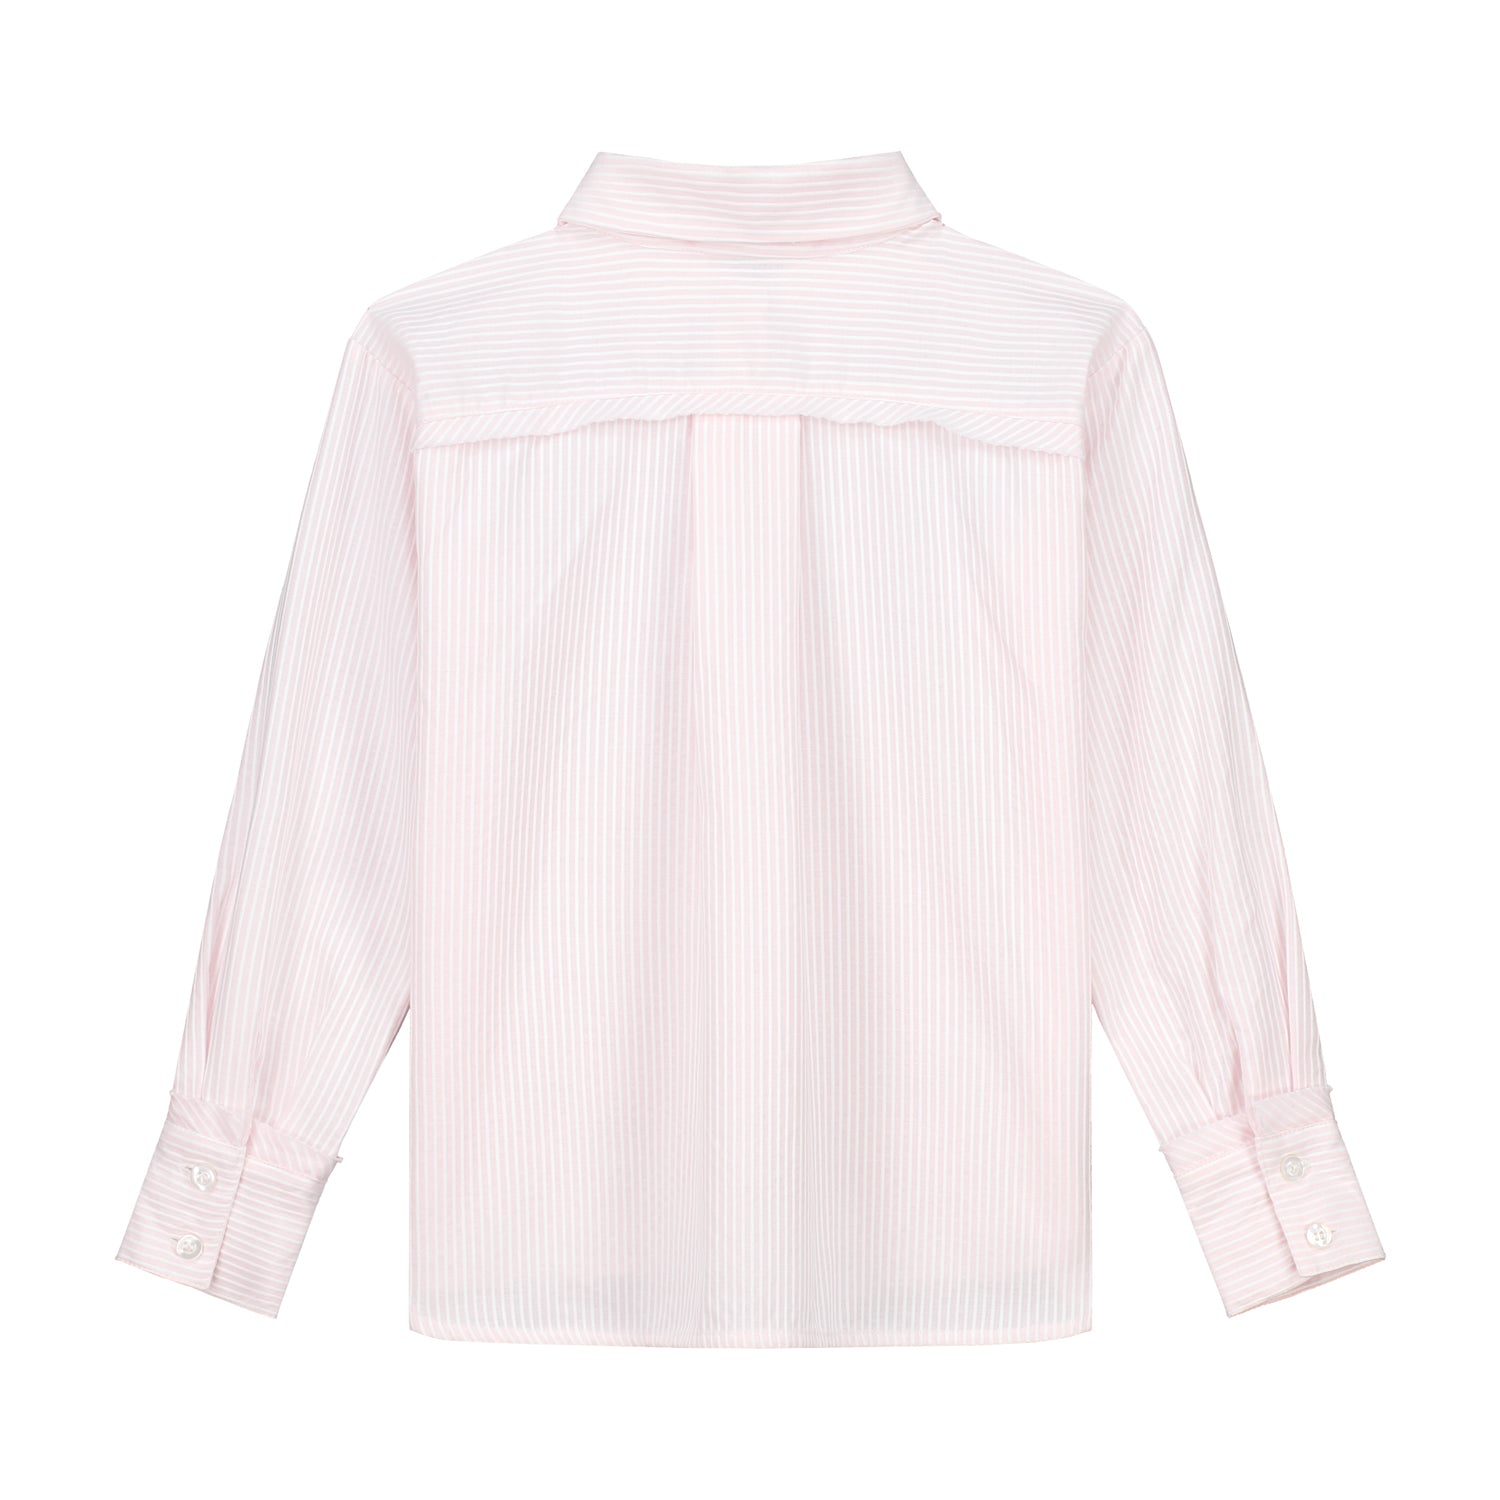 Charlie Petite - Isra blouse - pink stripes